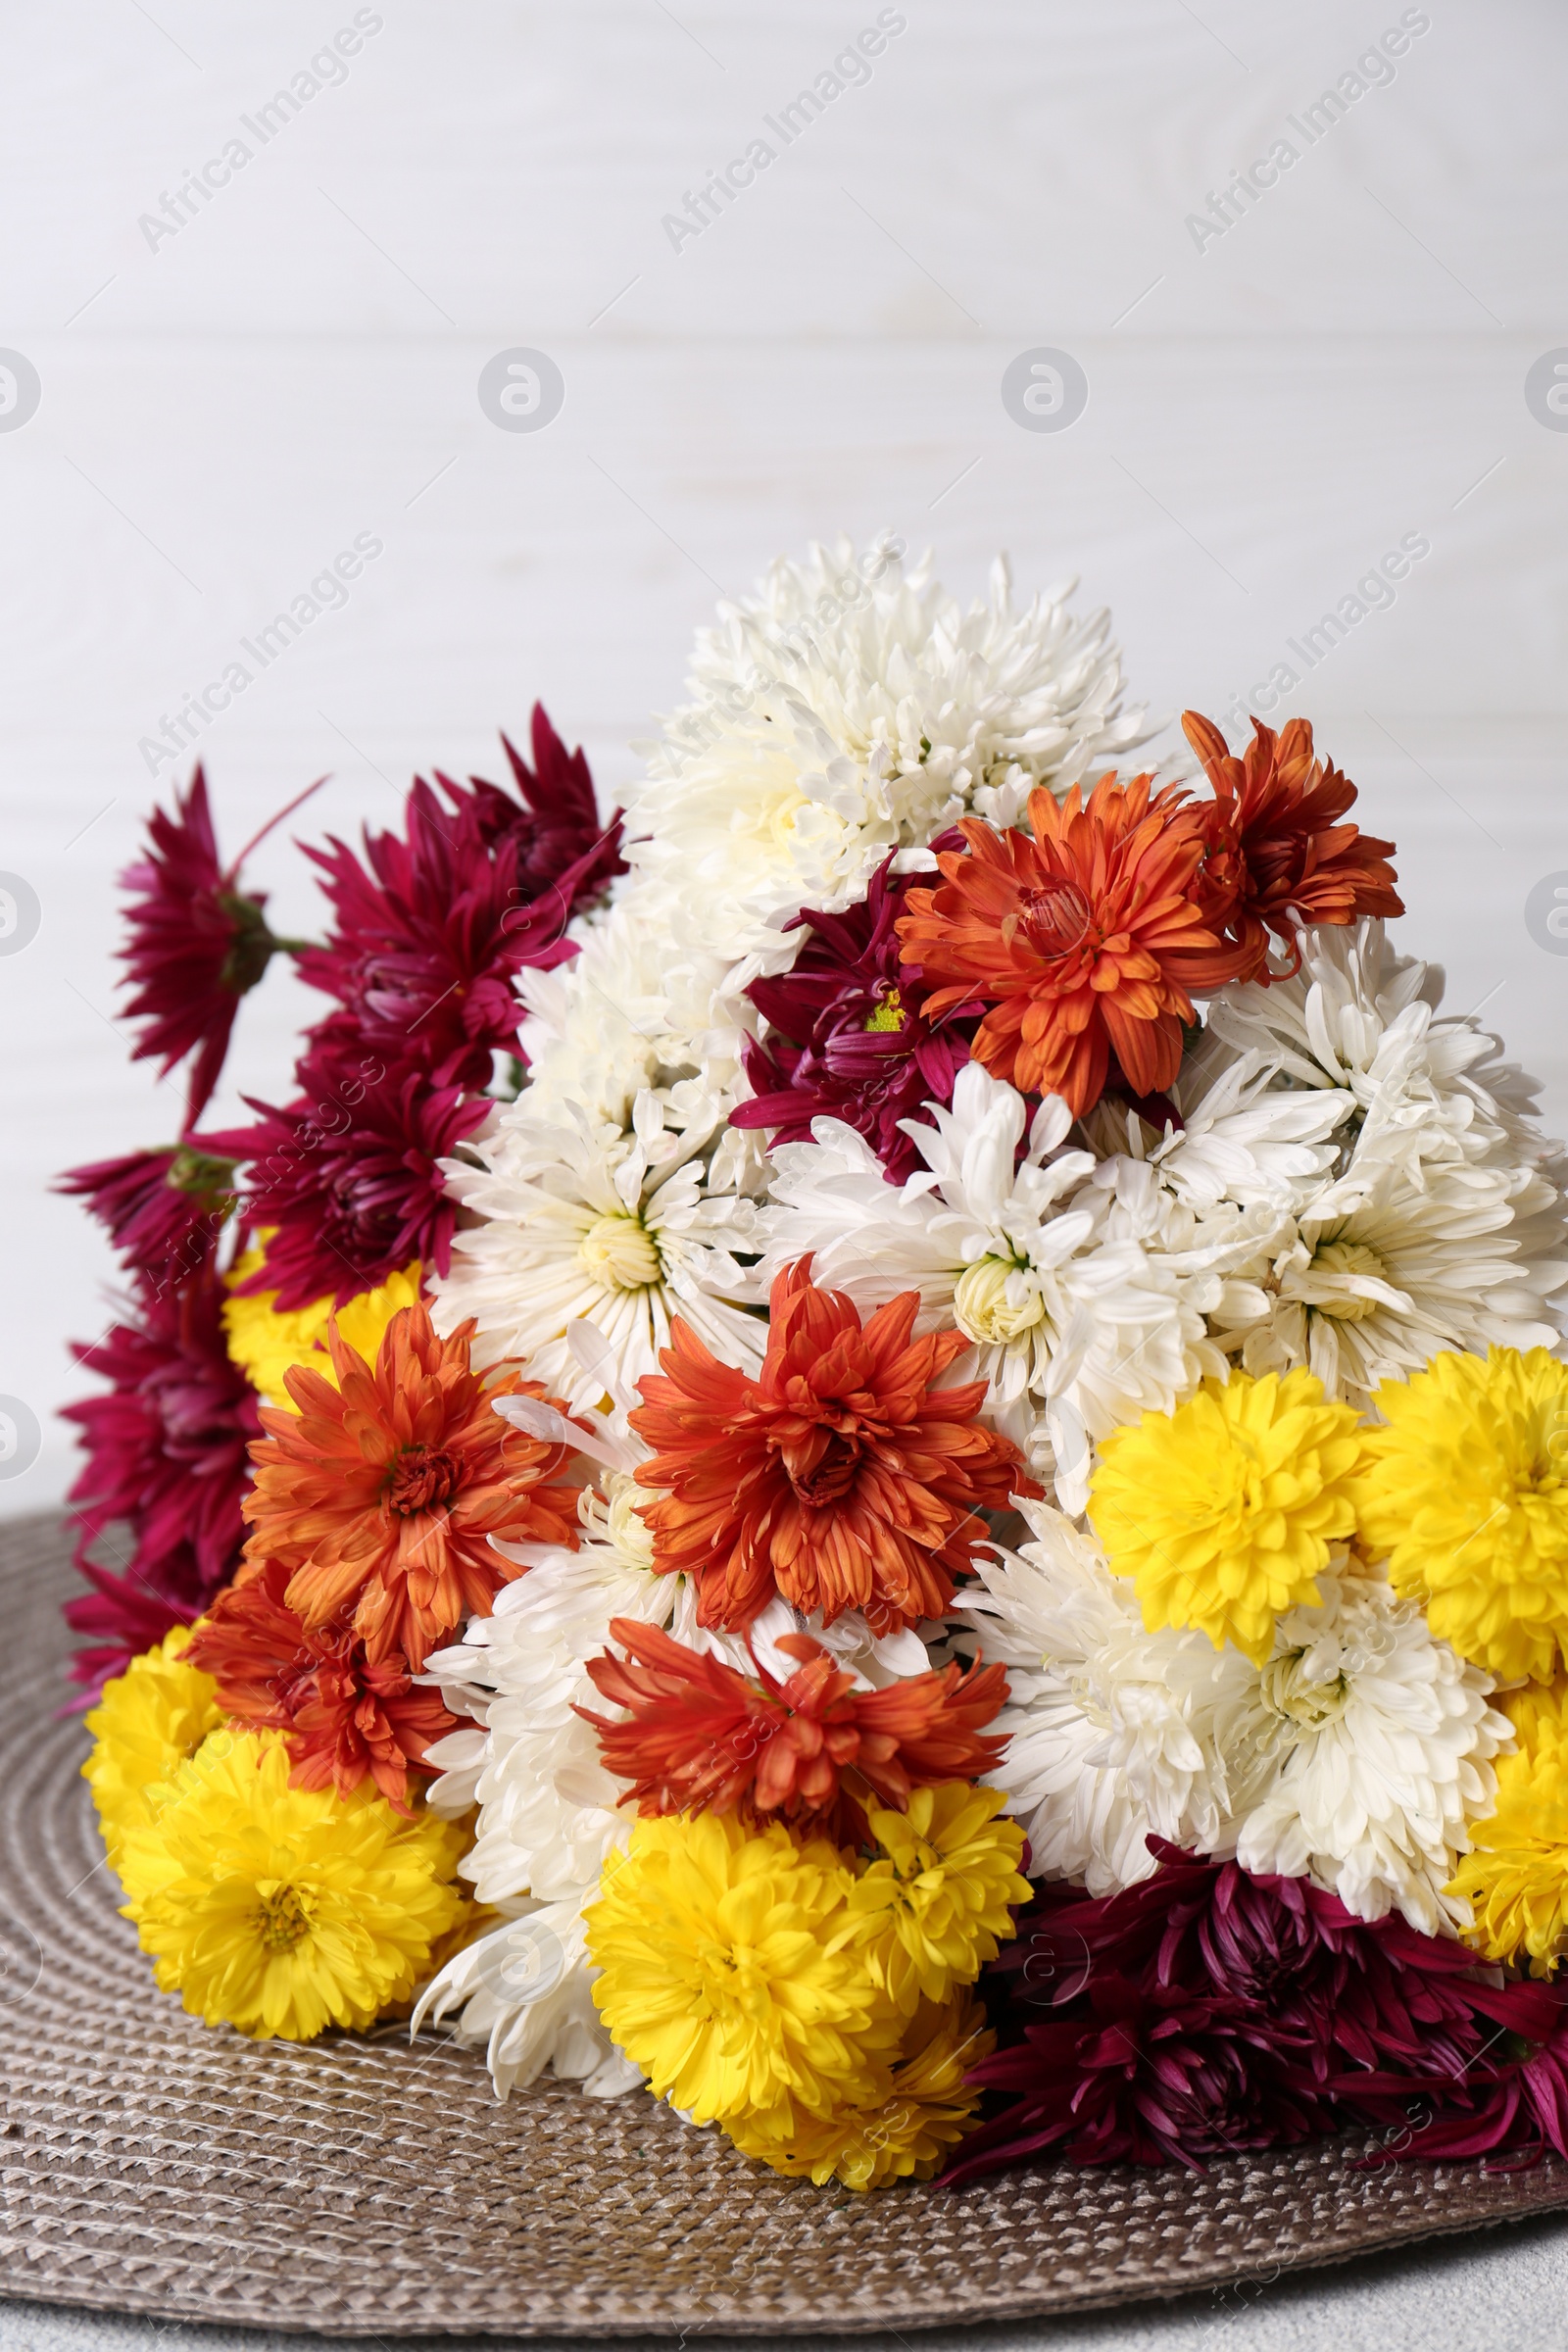 Photo of Many beautiful chrysanthemum flowers on wicker mat